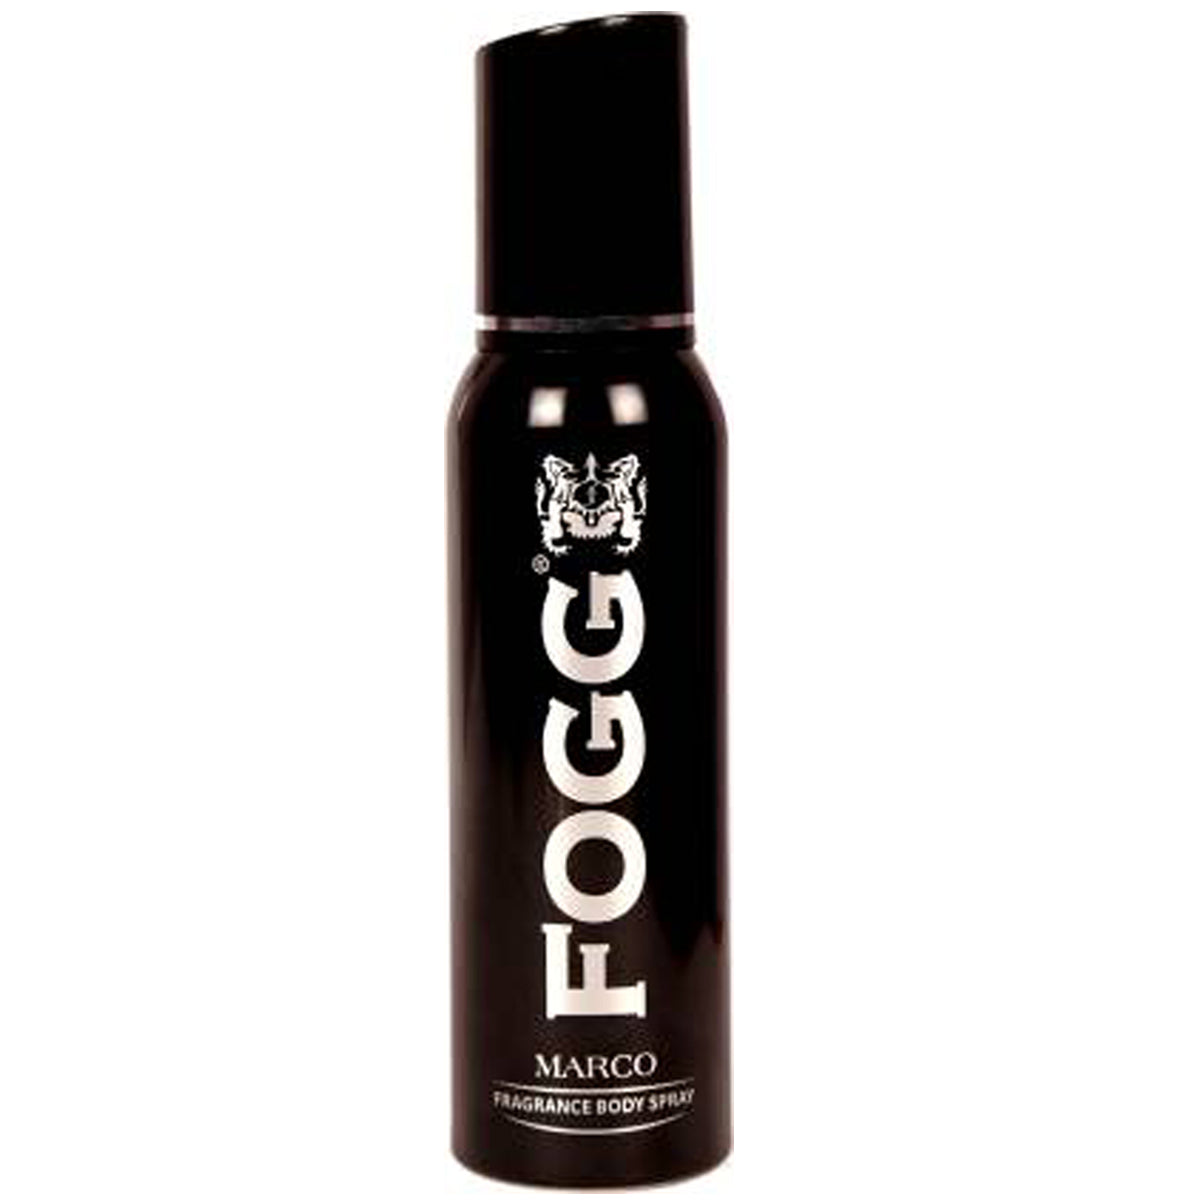 Fogg Marco Fragrance Body Spray 150ml